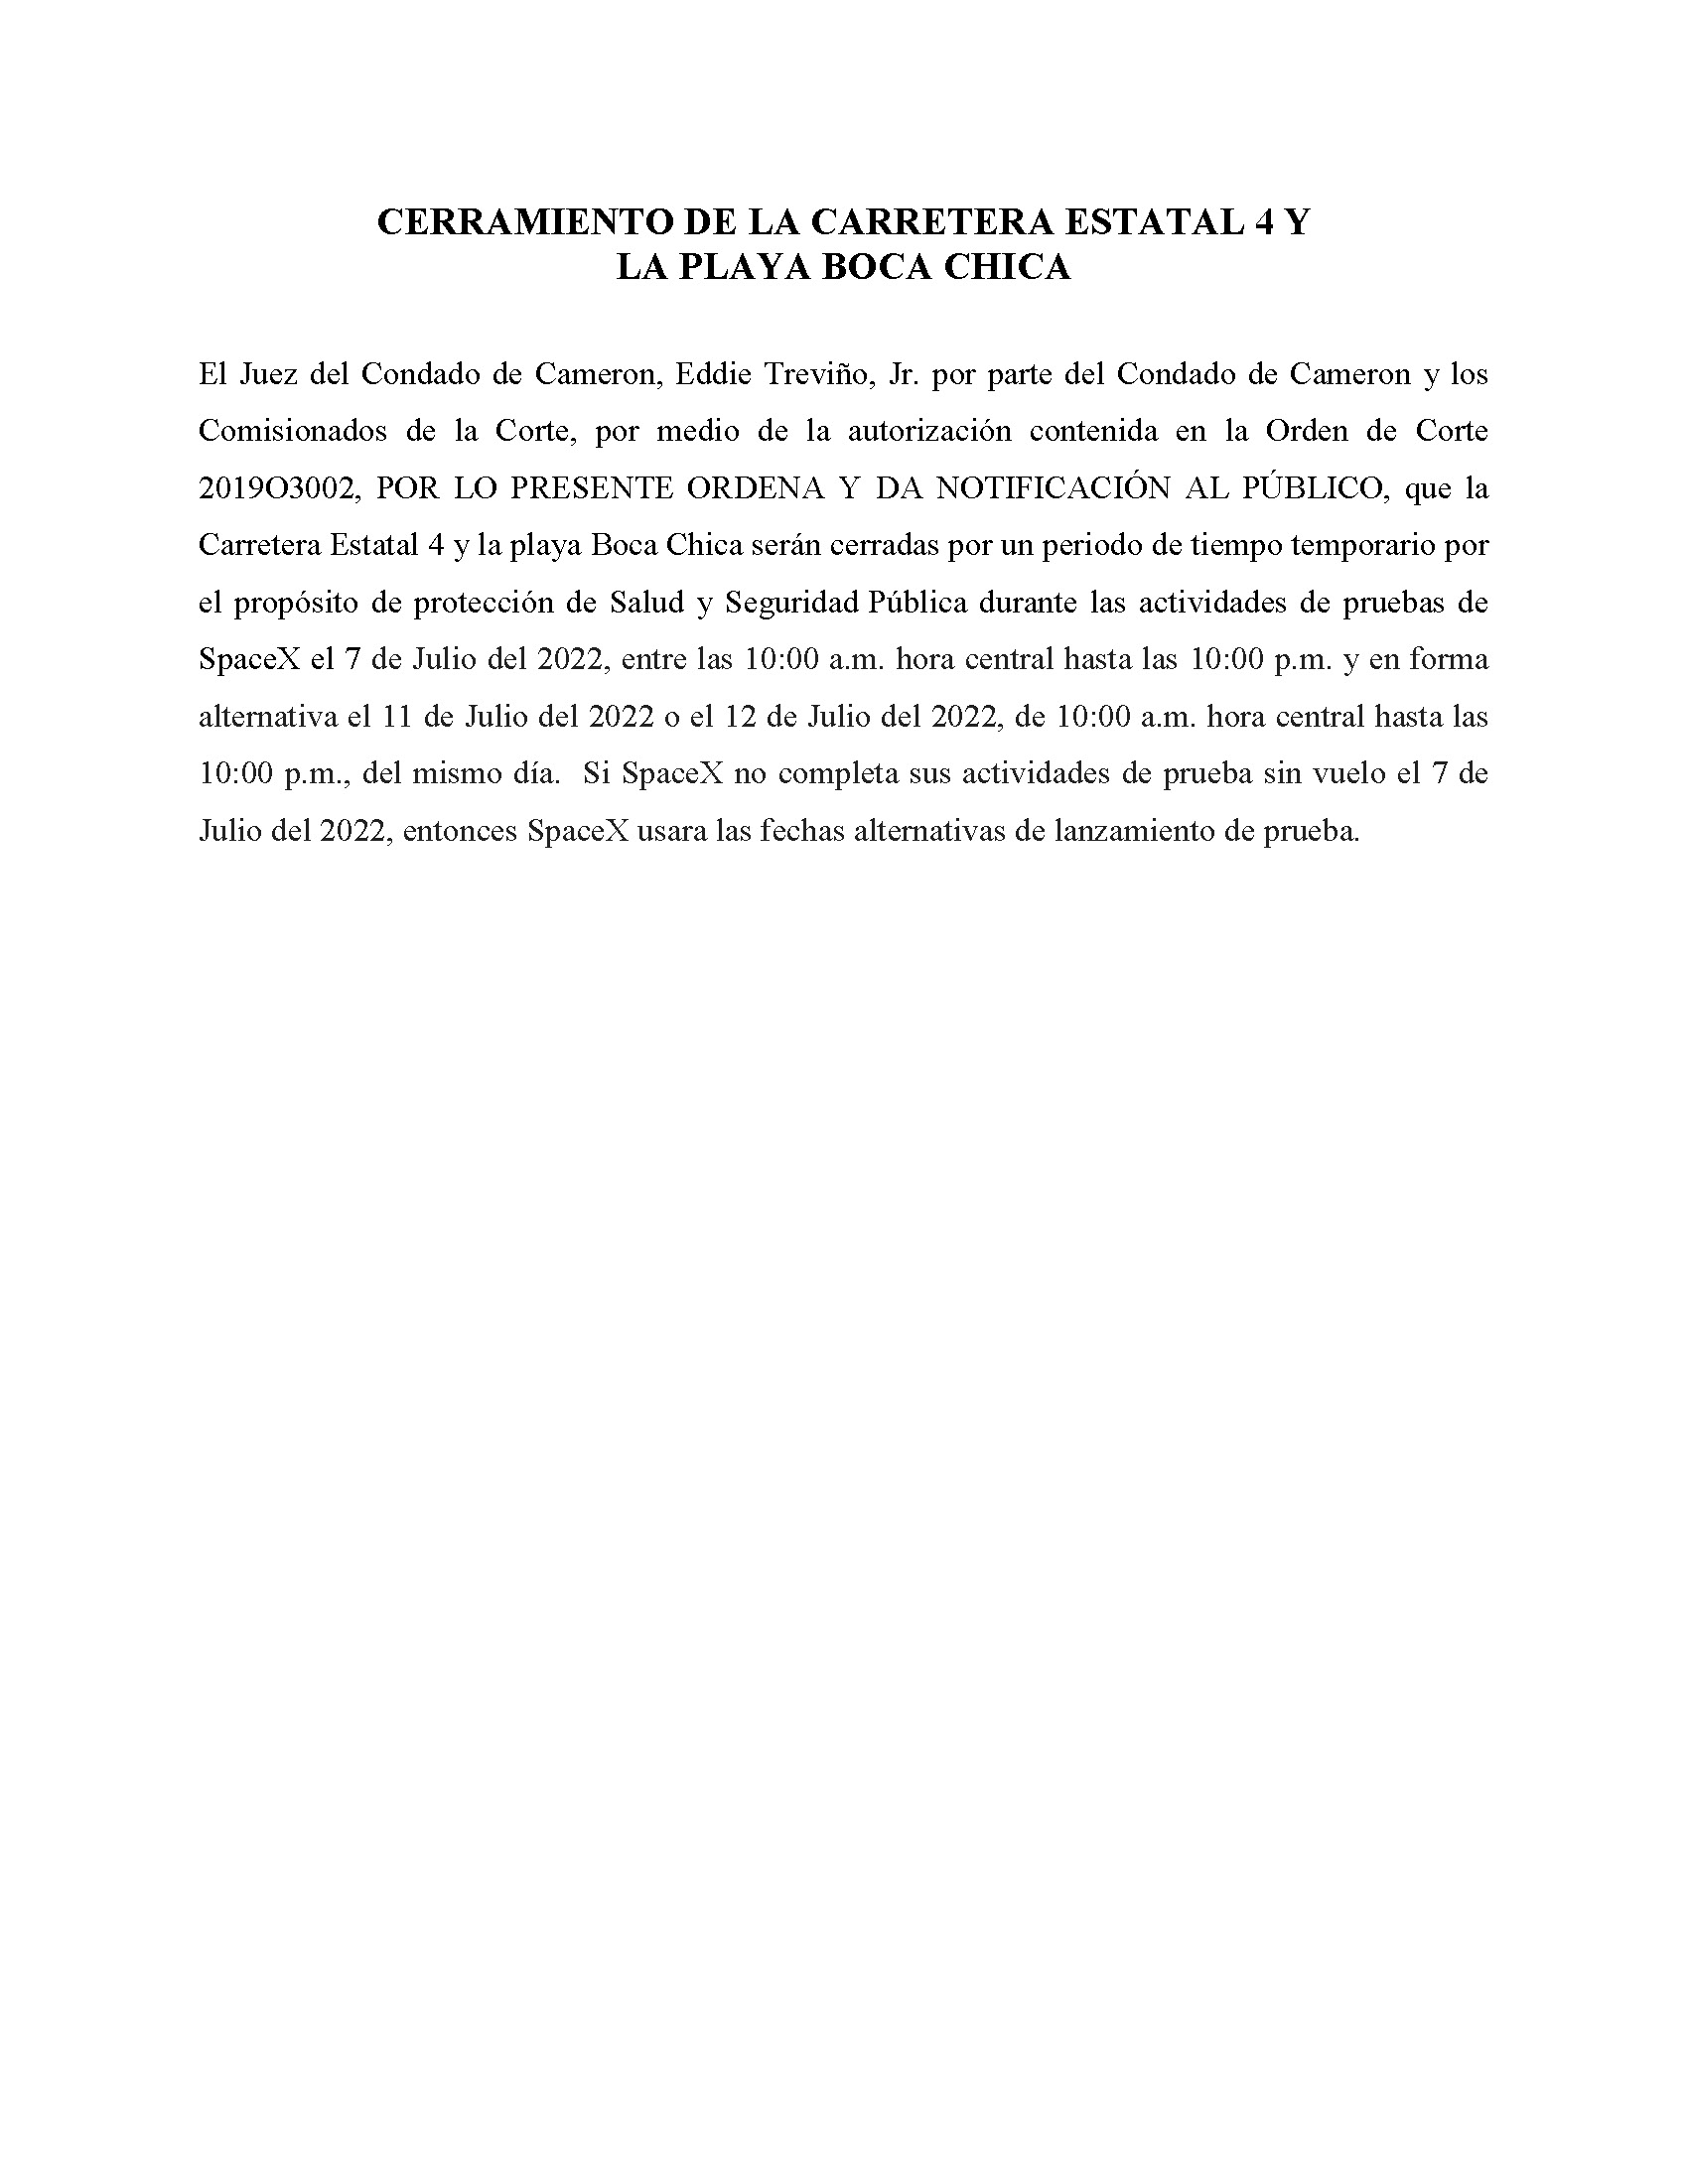 ORDER.CLOSURE OF HIGHWAY 4 Y LA PLAYA BOCA CHICA.SPANISH.07.07.2022